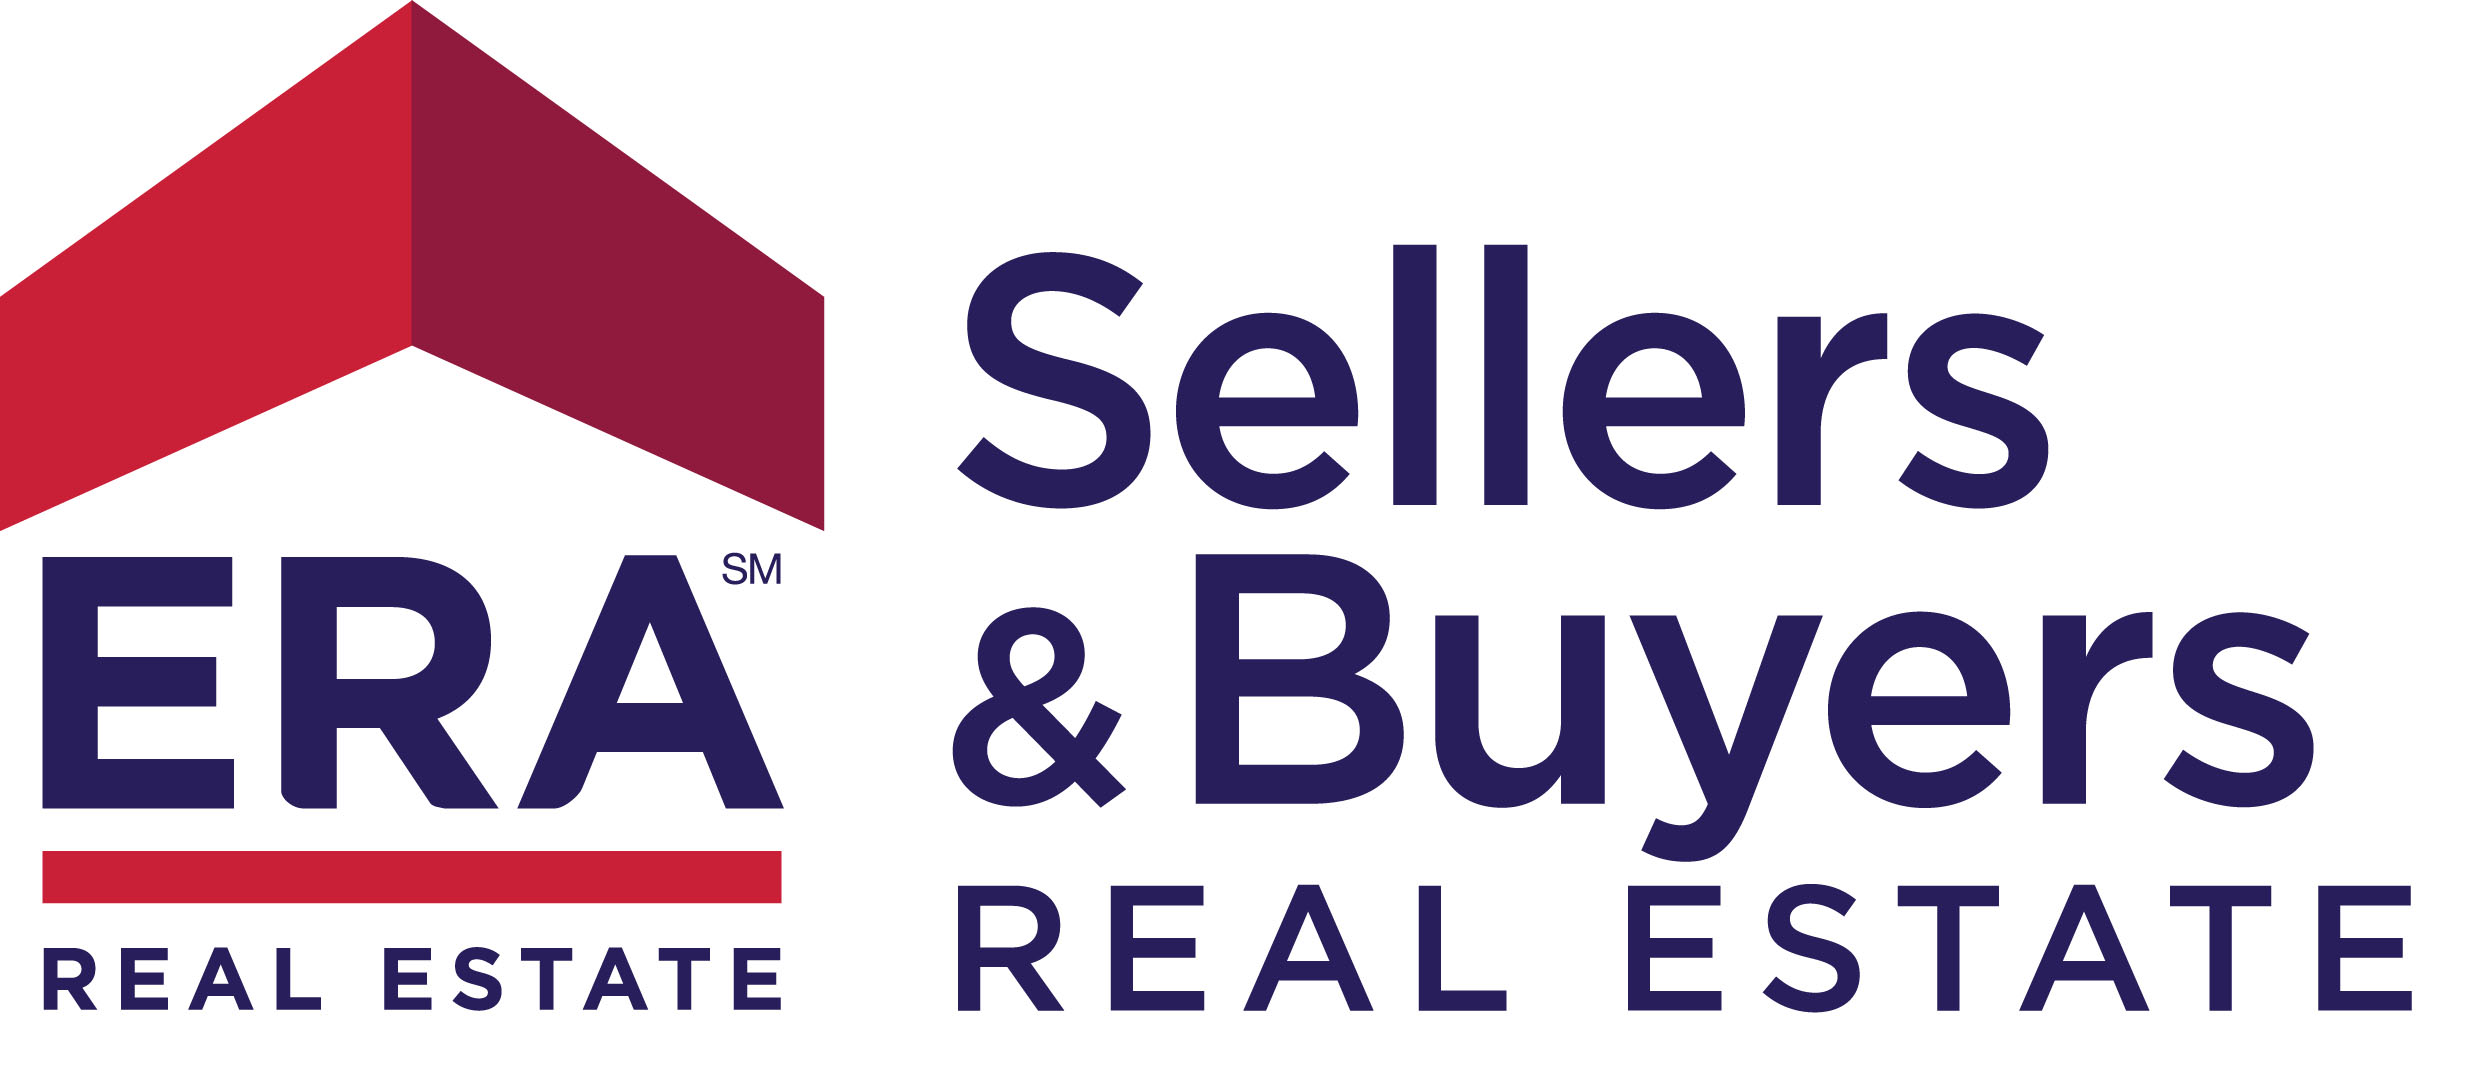 ERA Sellers Buyers logo.indd